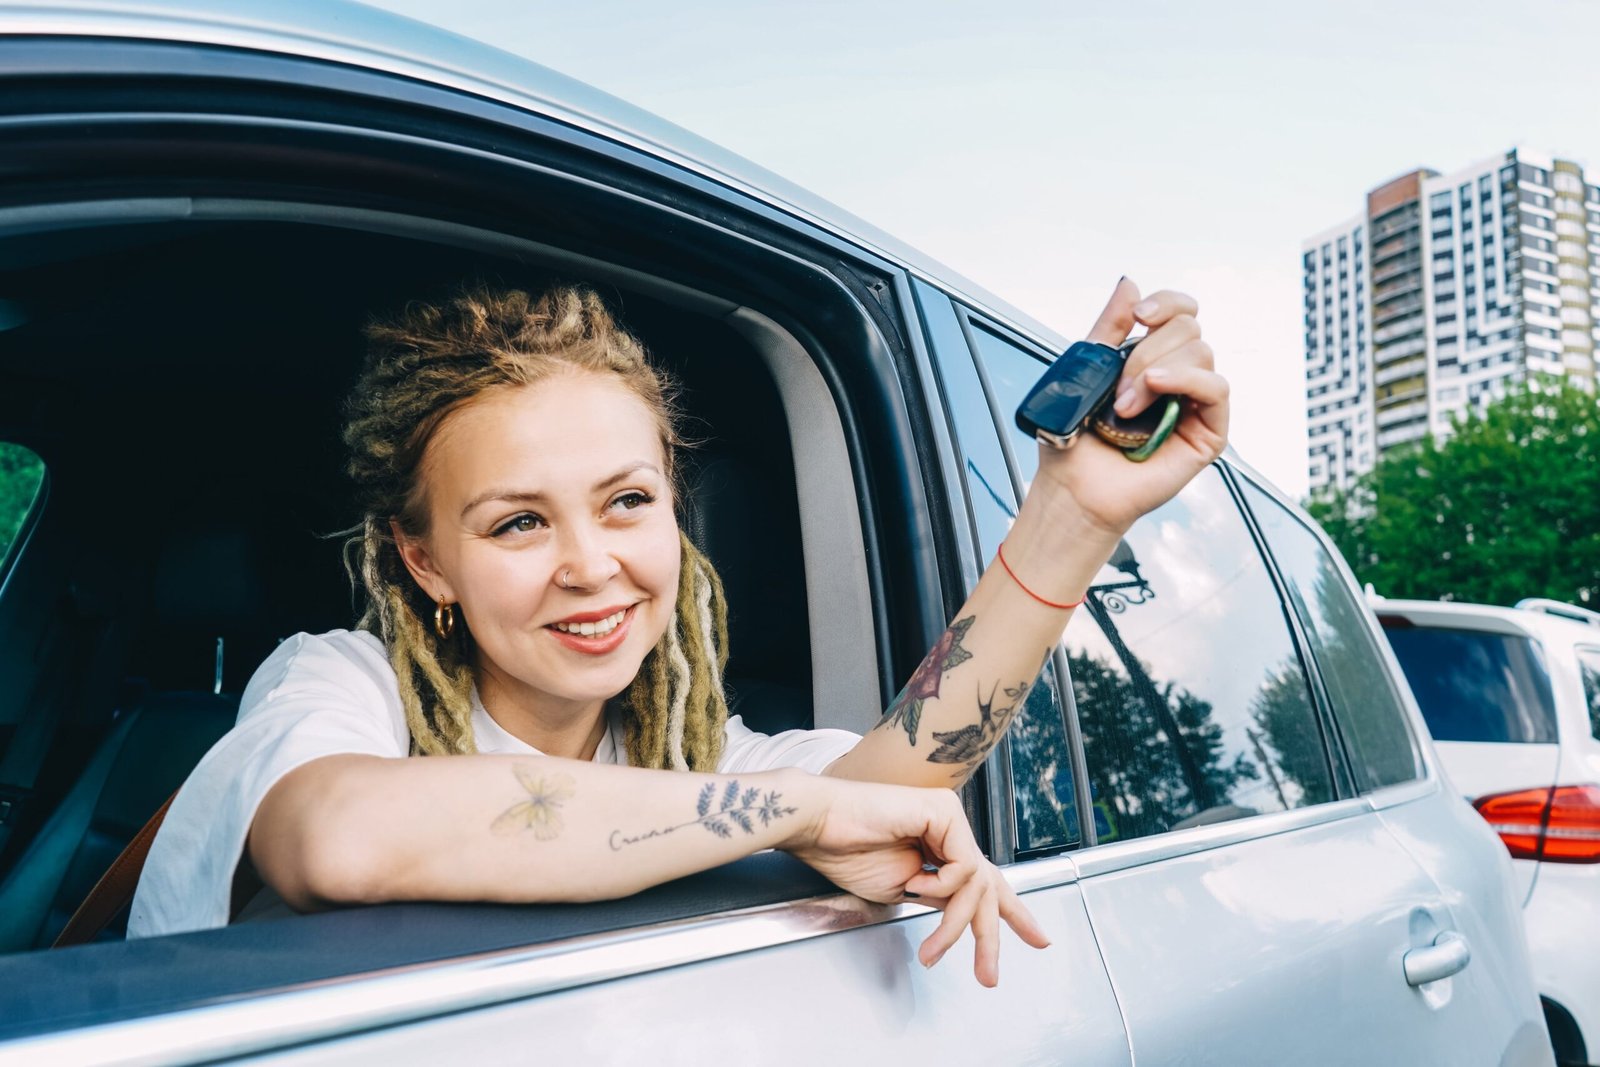 happy-smiling-woman-with-car-key-driving-2022-11-17-00-15-14-utc-min-scaled.jpg